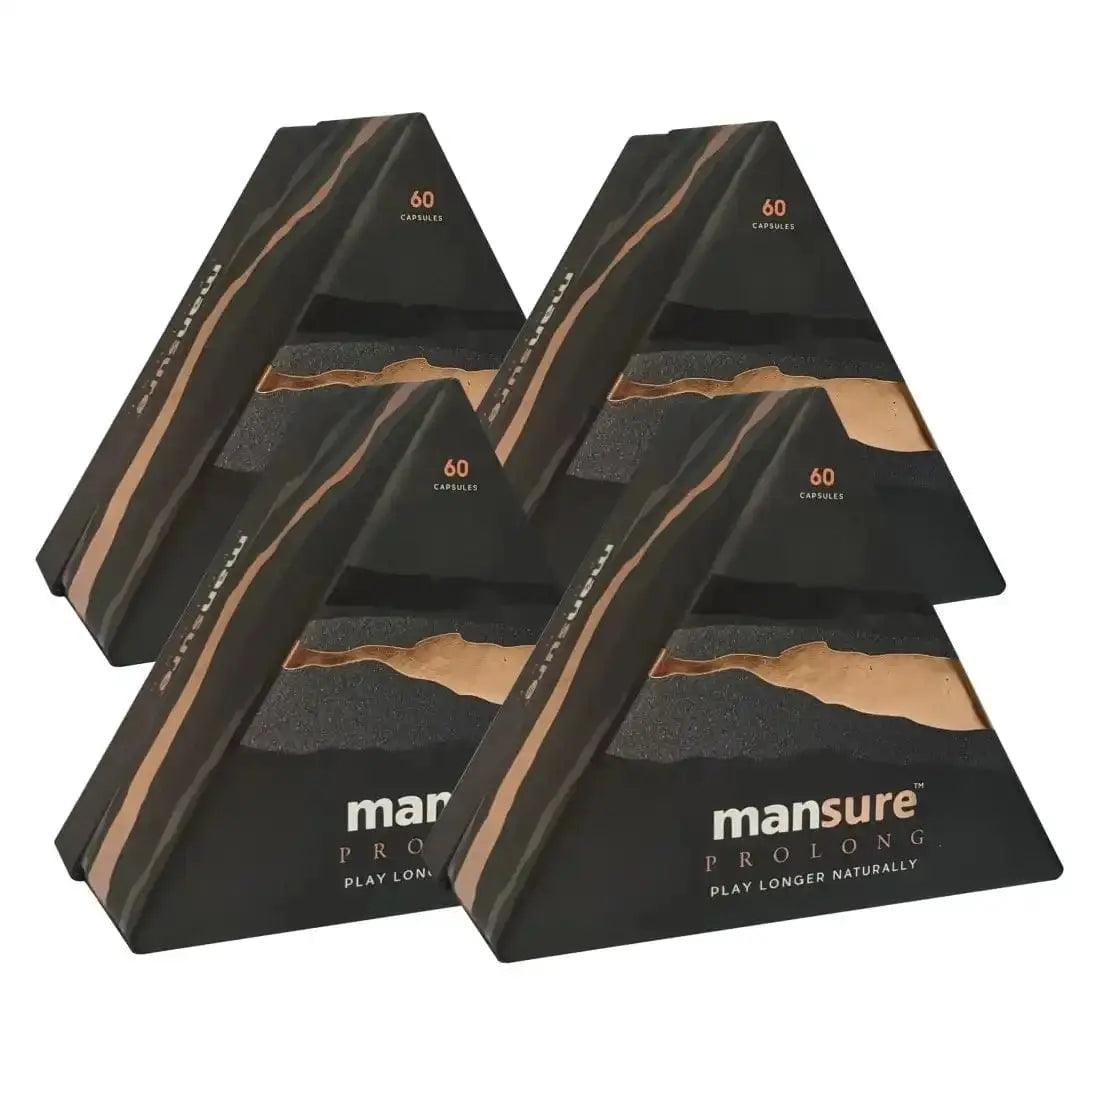 ManSure PROLONG for Men's Health - 60 Capsules 9559682308252